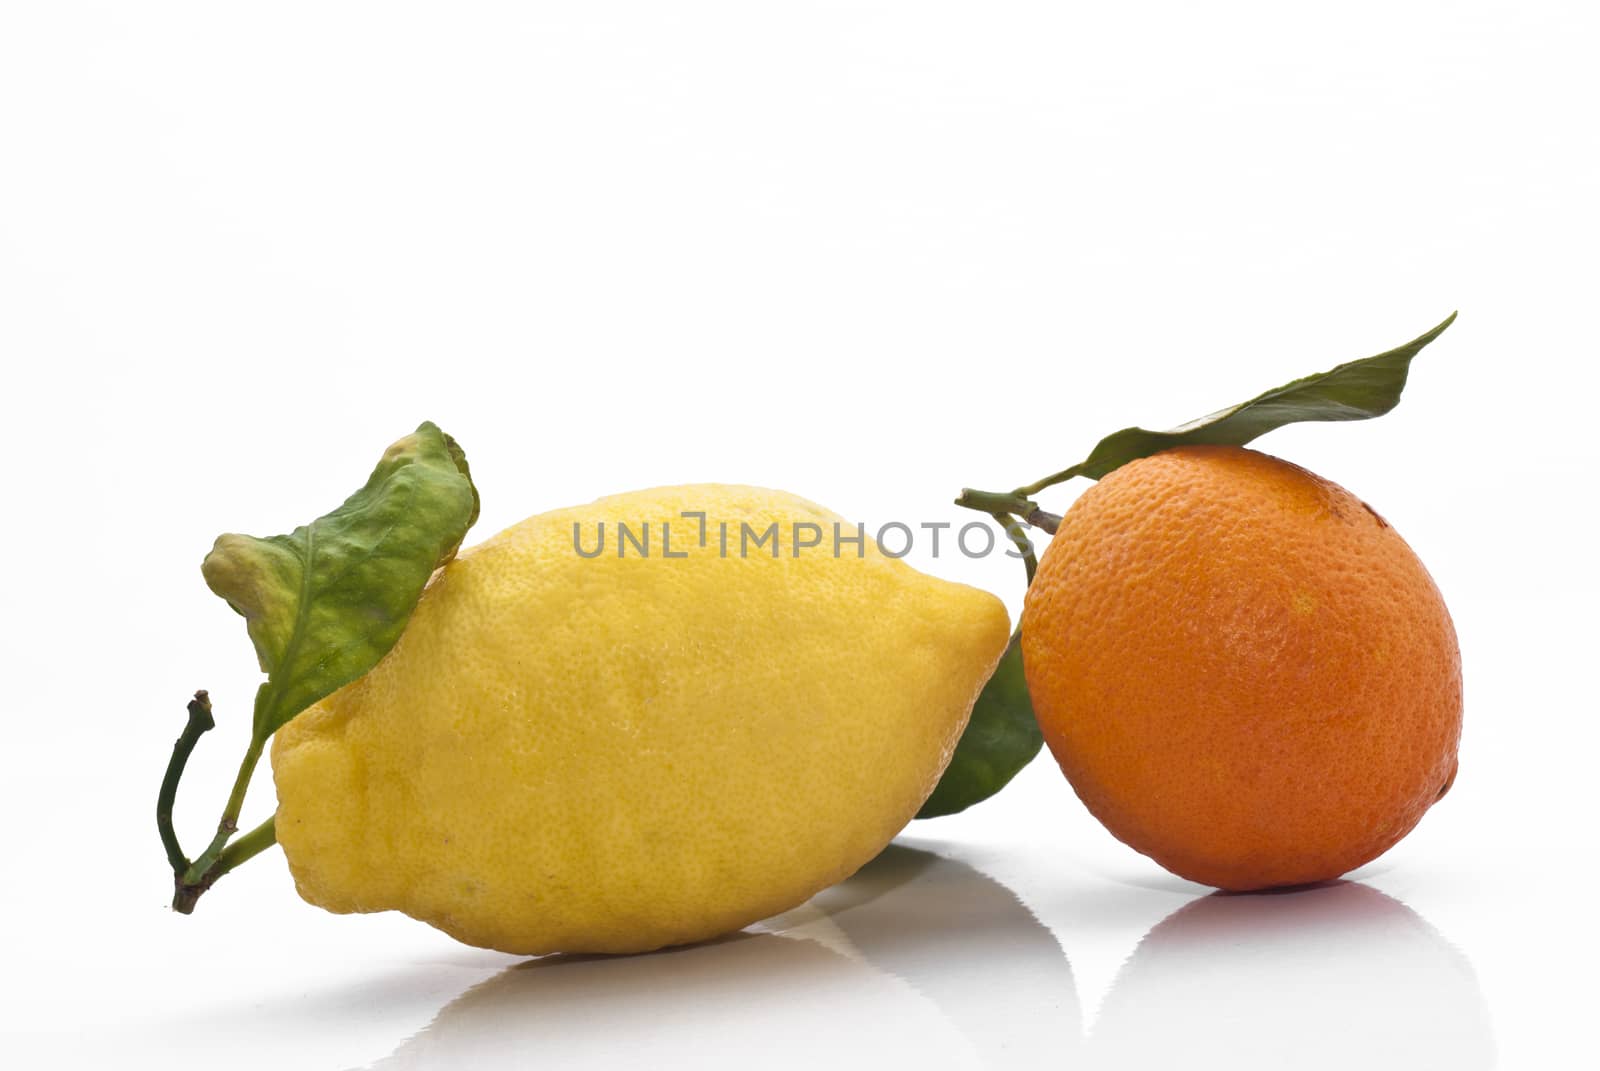 Sicilian Orange and Lemon by gandolfocannatella